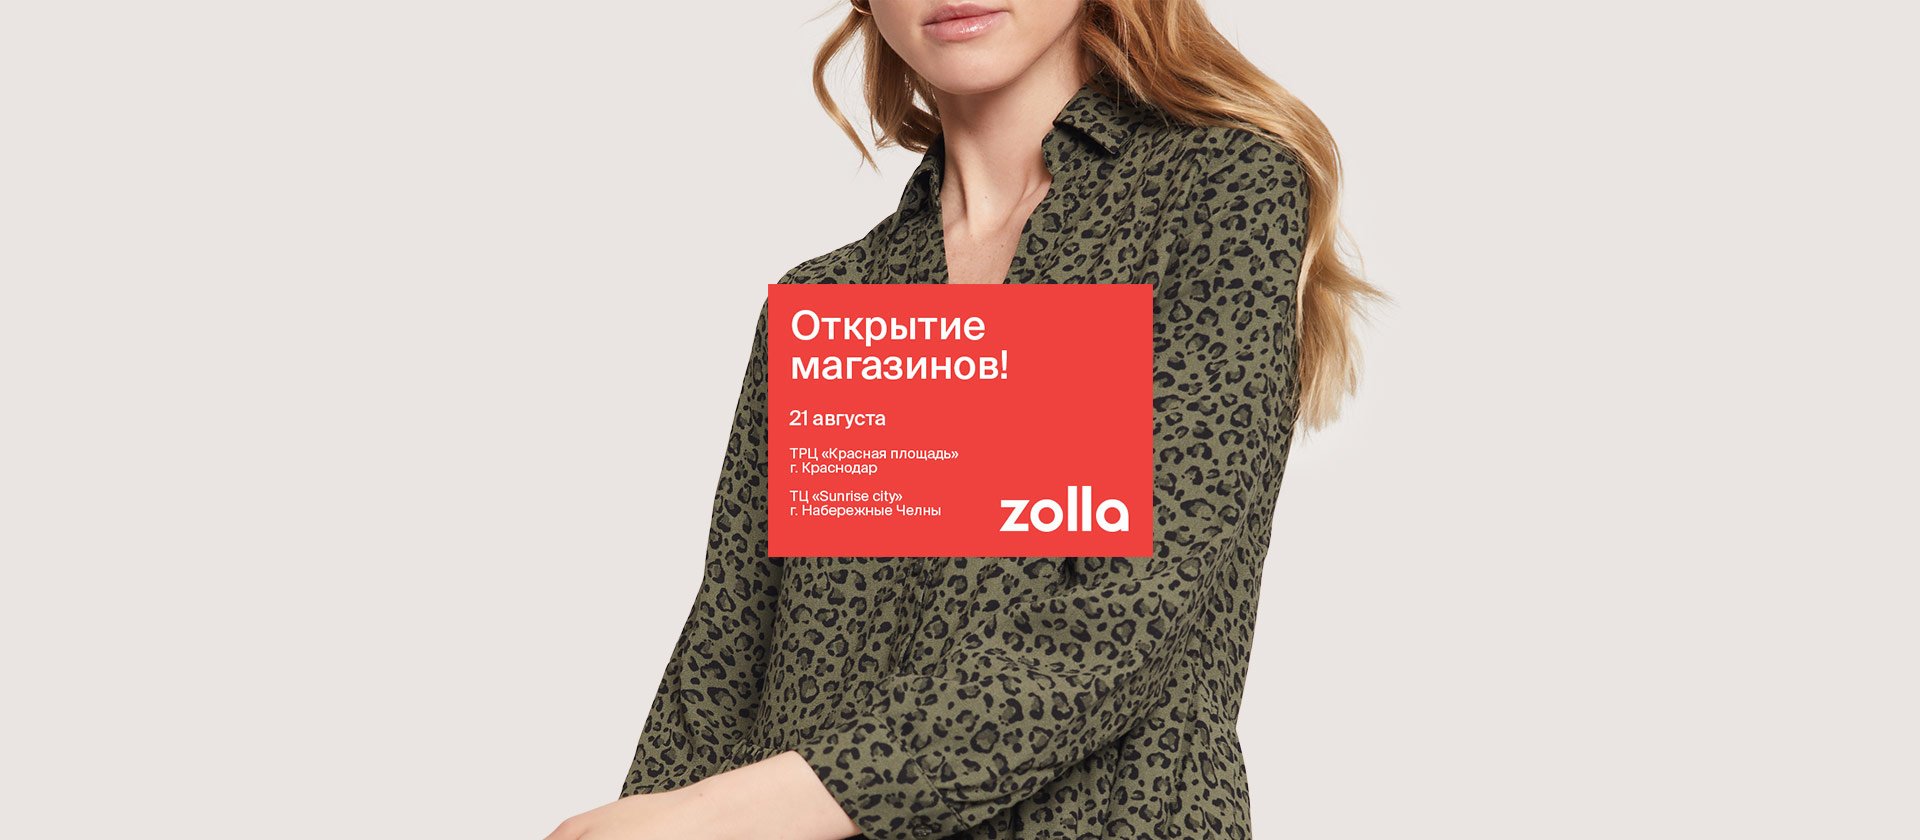 Сайт интернет магазина zolla. Золла туника женская. Zolla интернет магазин Краснодар. Цвет 7500 Zolla. Zolla интернет магазин каталог женской одежды.